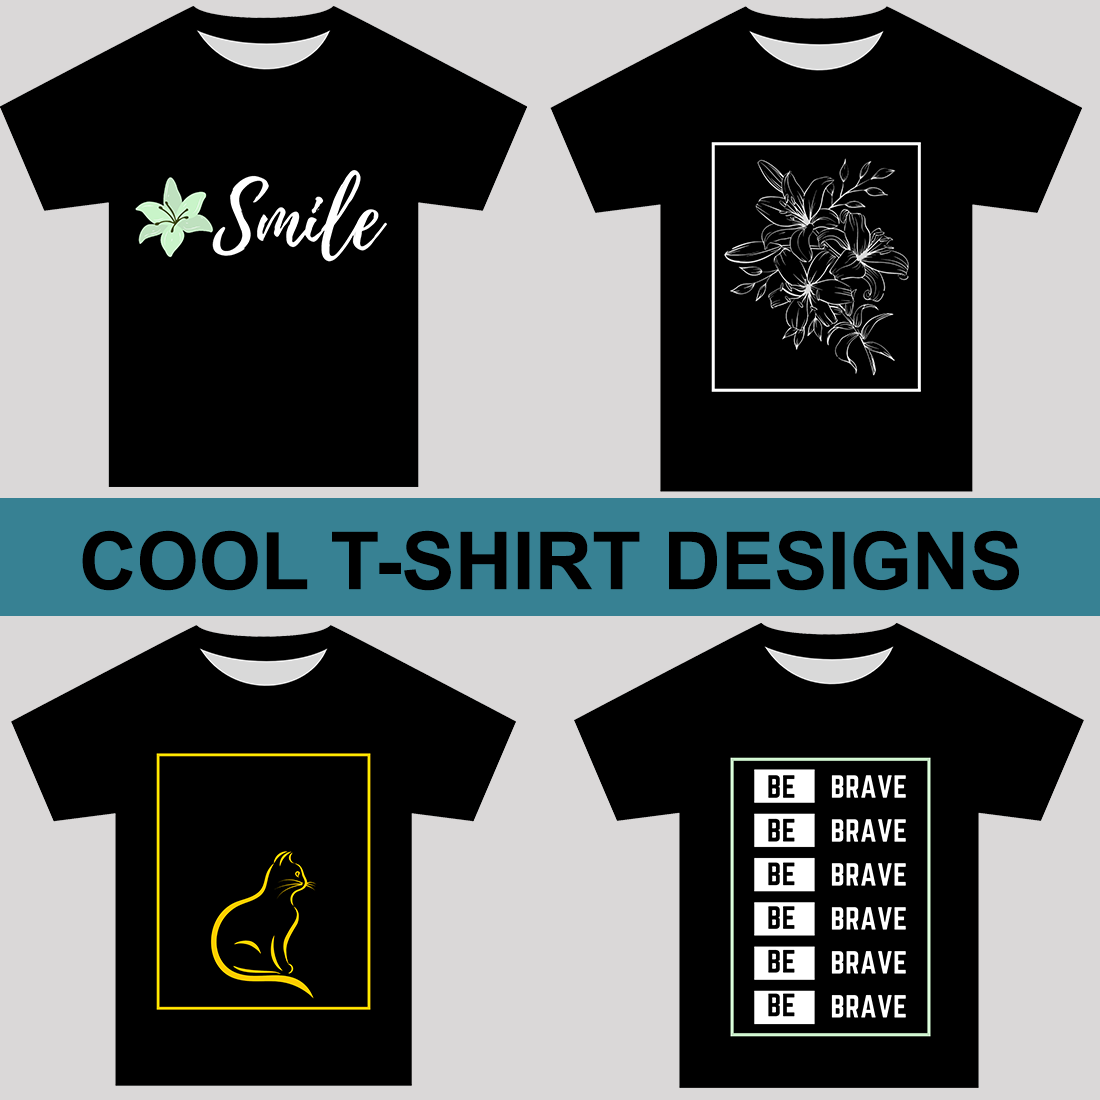 4 cool T-shirt deigns bundle collection cover image.